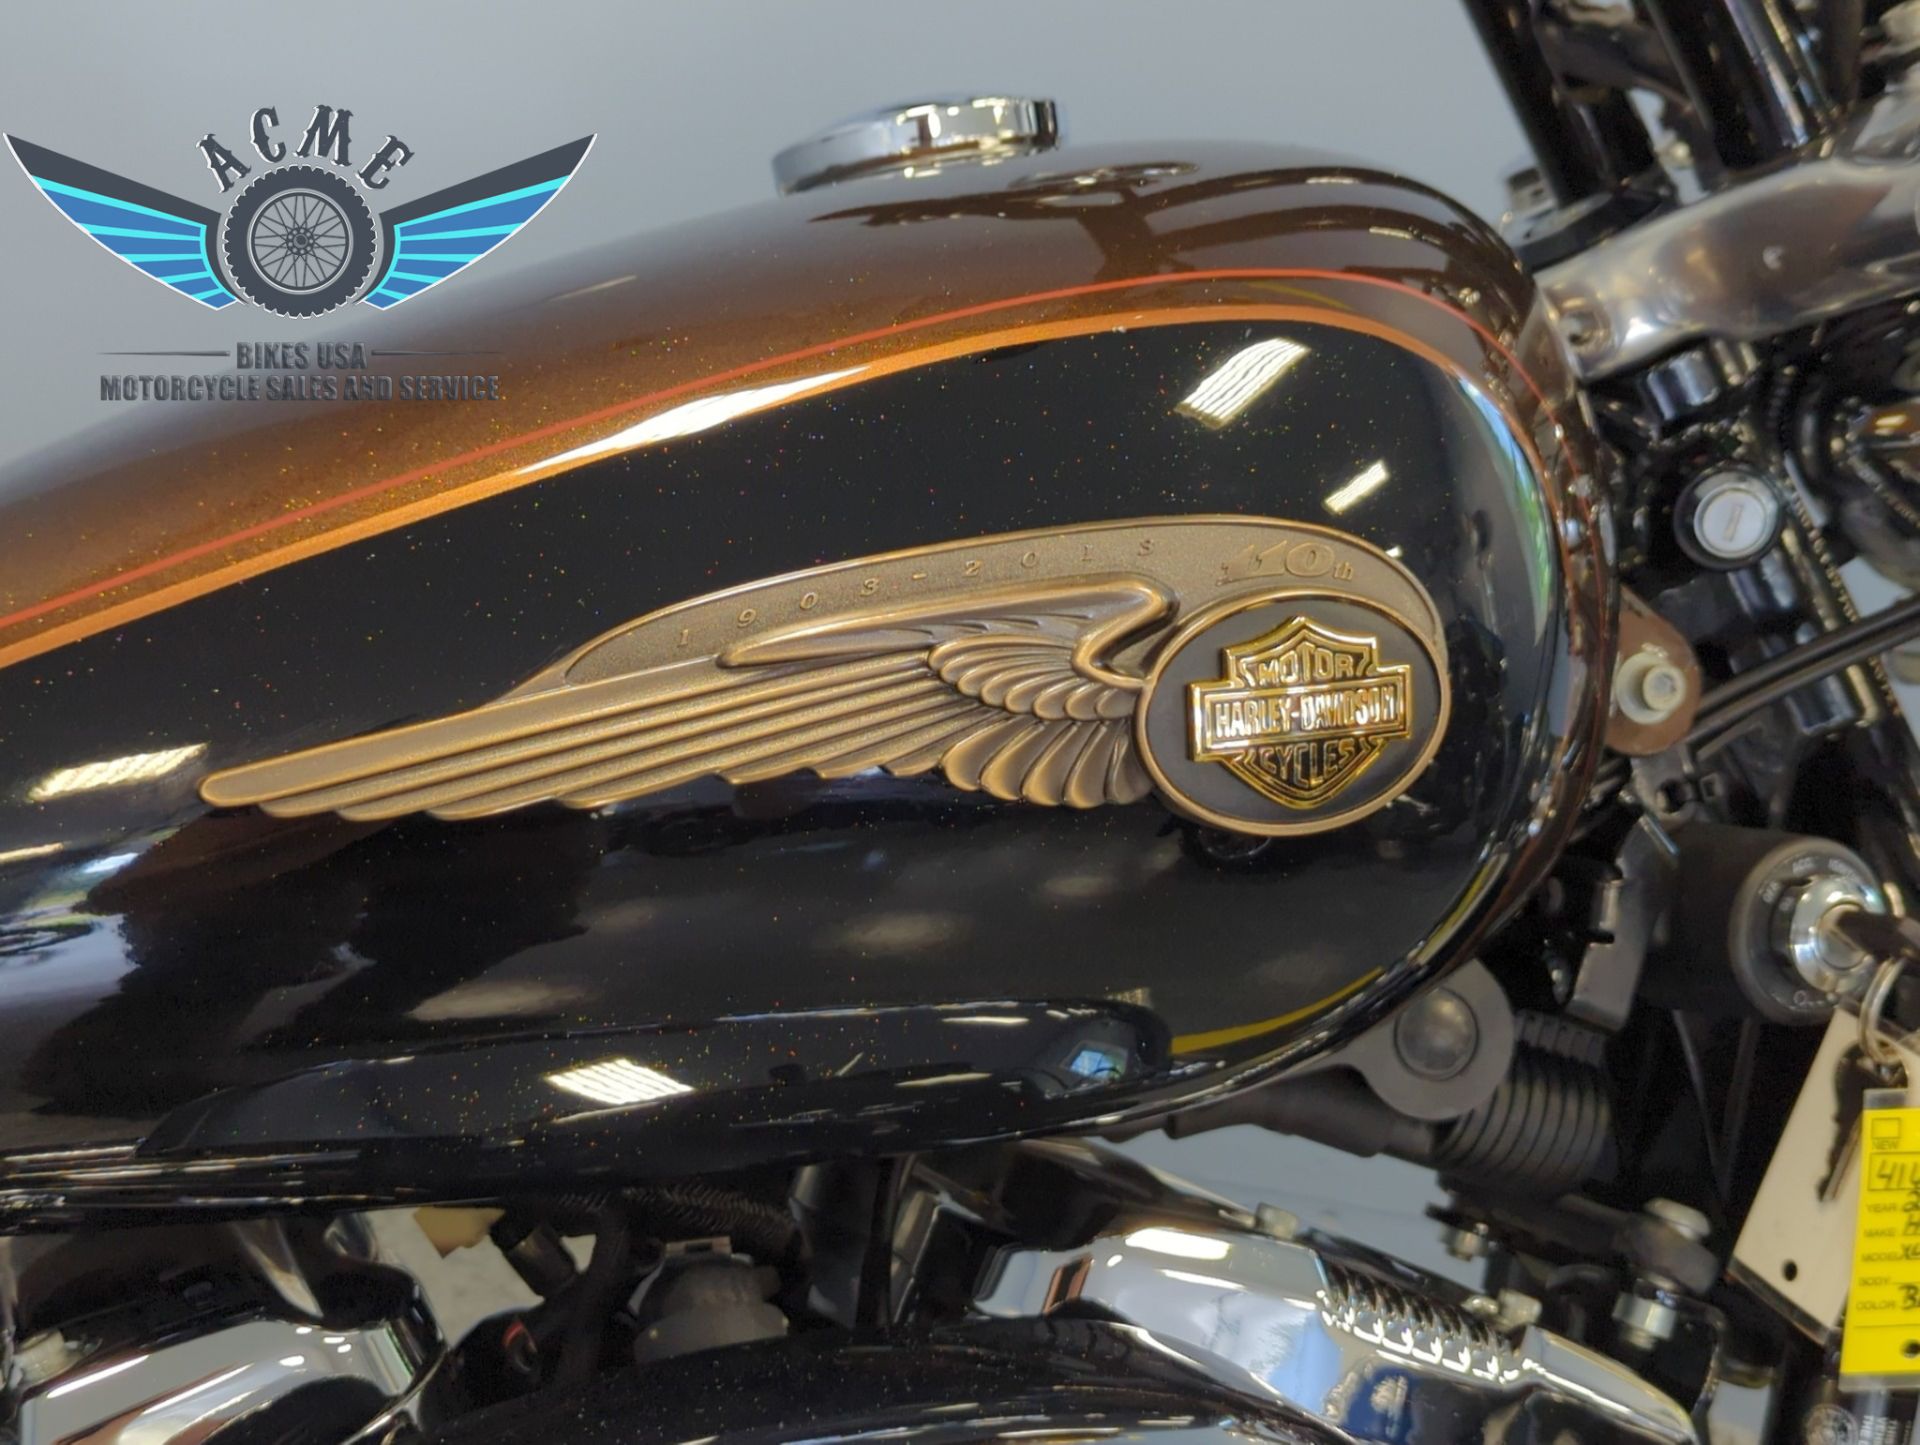 2013 Harley-Davidson Sportster® 1200 Custom 110th Anniversary Edition in Meredith, New Hampshire - Photo 14